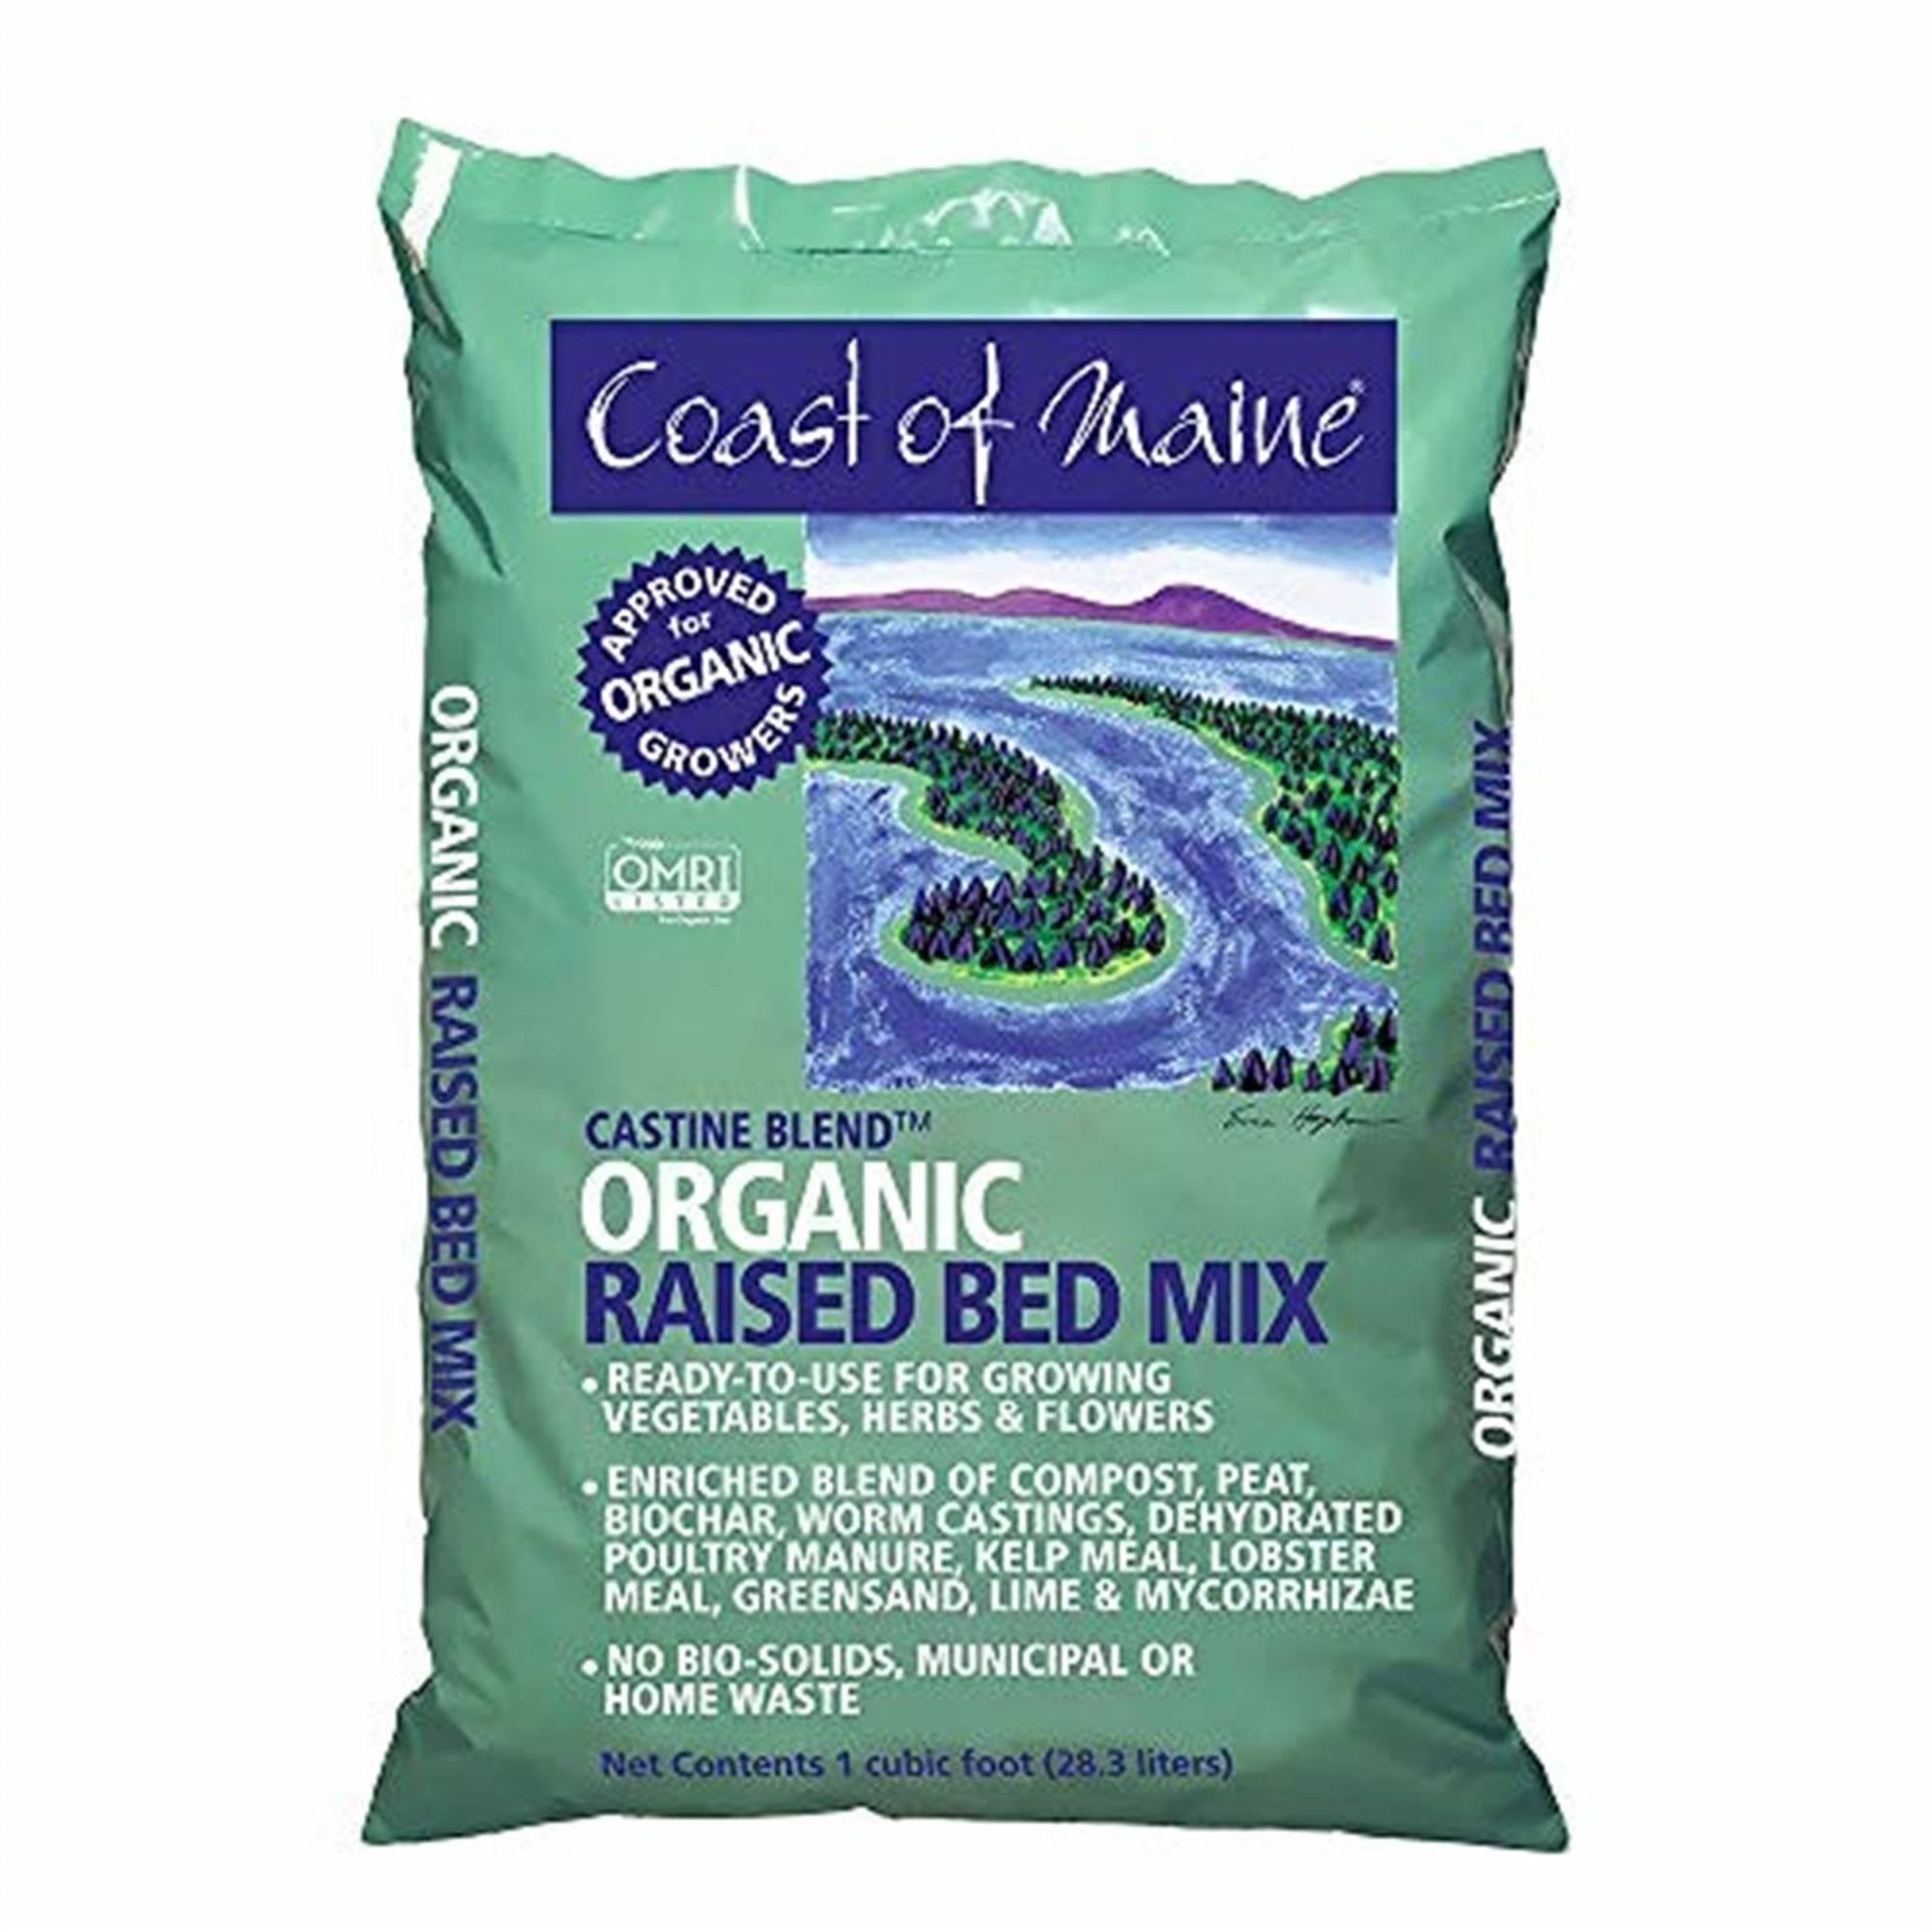 Coast of Maine Castine Blend, Organic Raised Bed Mix, 1 Cu ft